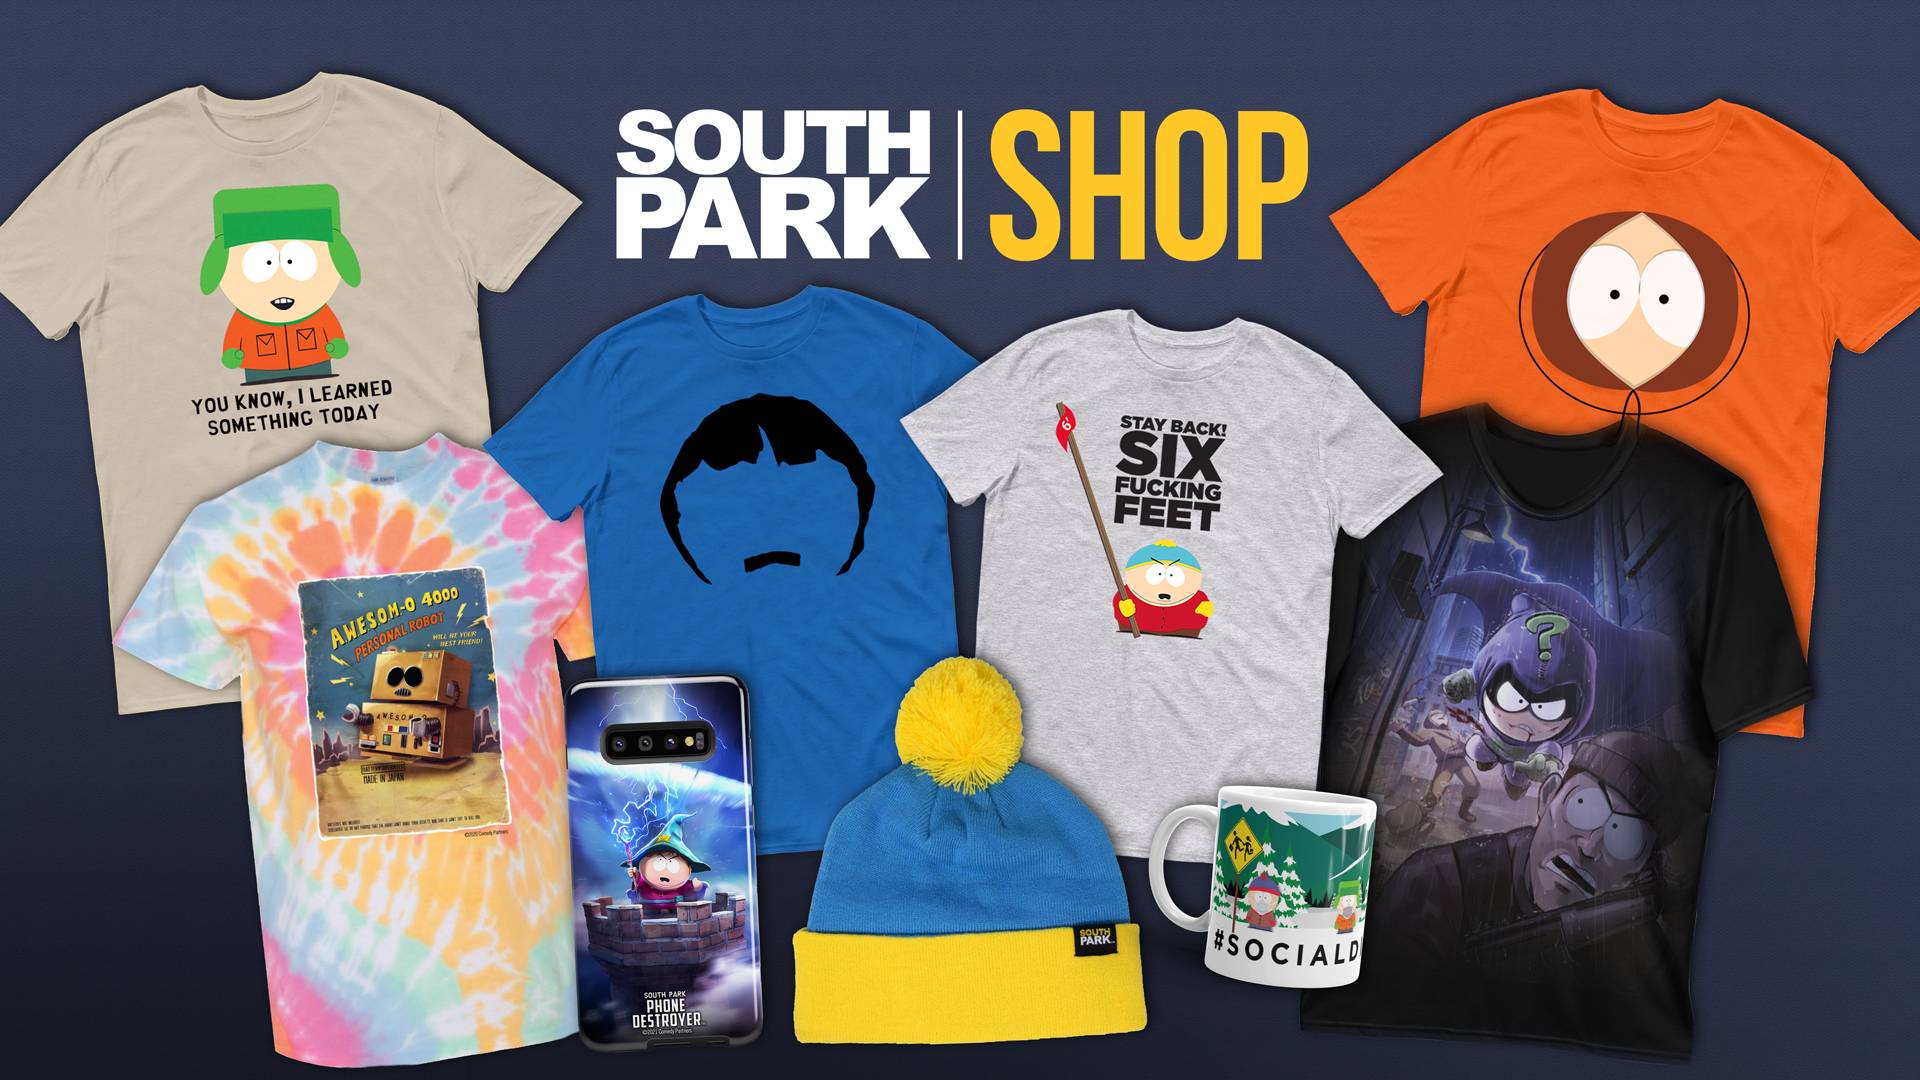 South Park Merch, The Ultimate South Park Merchandise Store